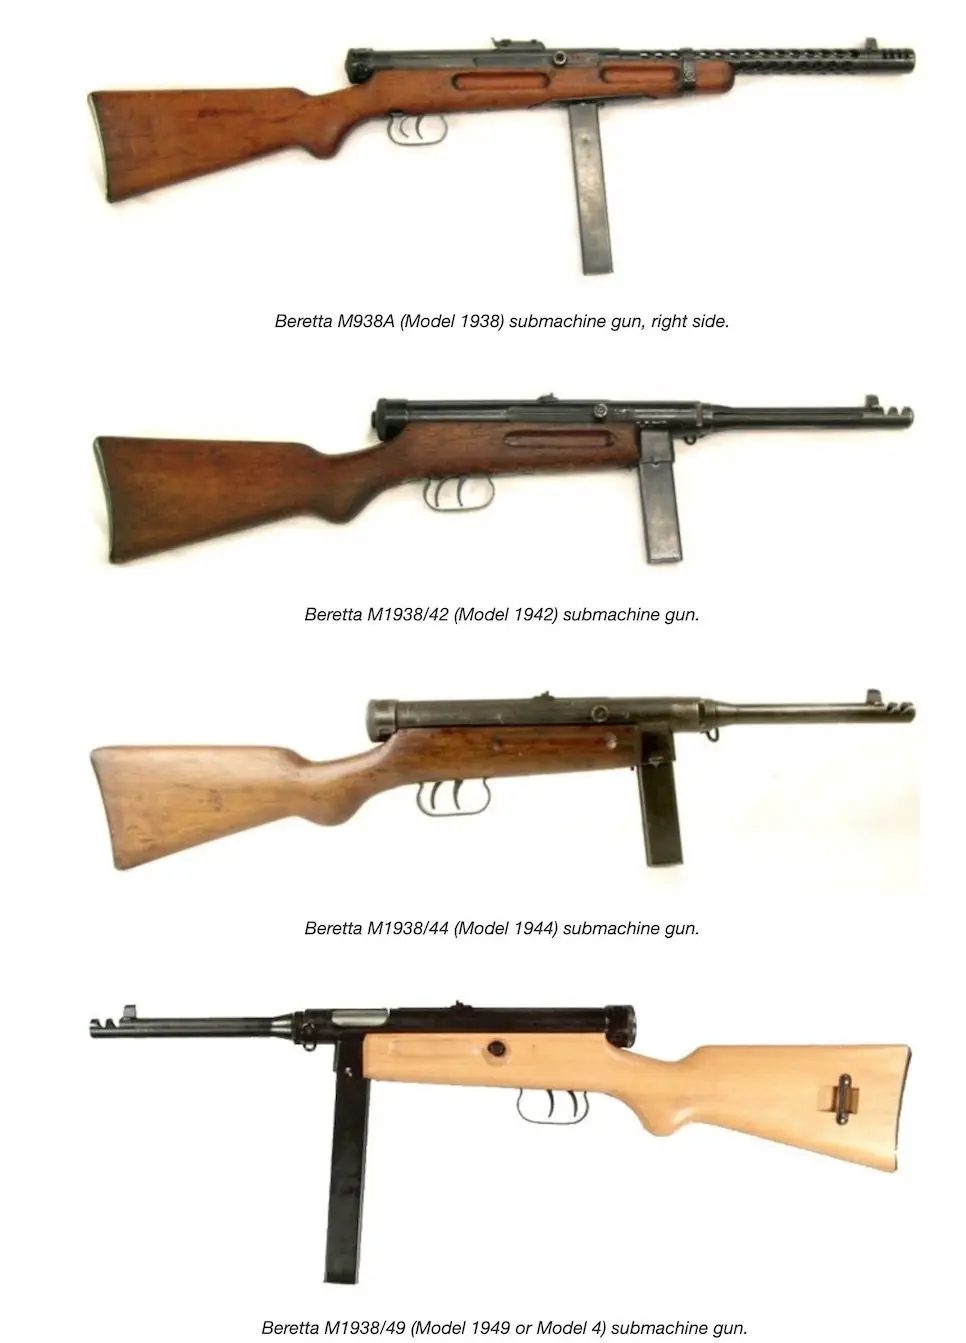 Beretta M1938 variants.